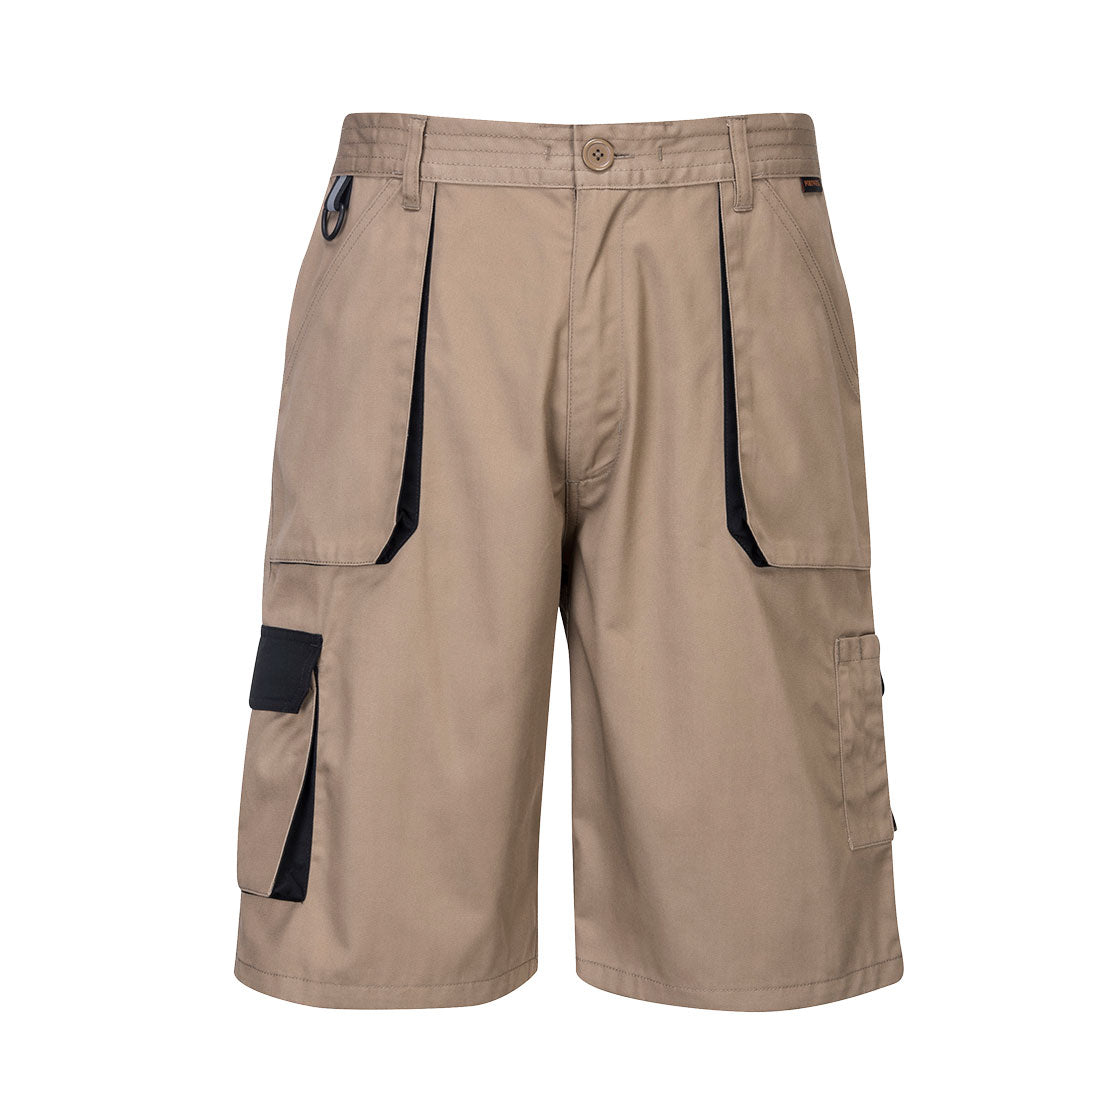 Portwest Texo Kontrast-Shorts